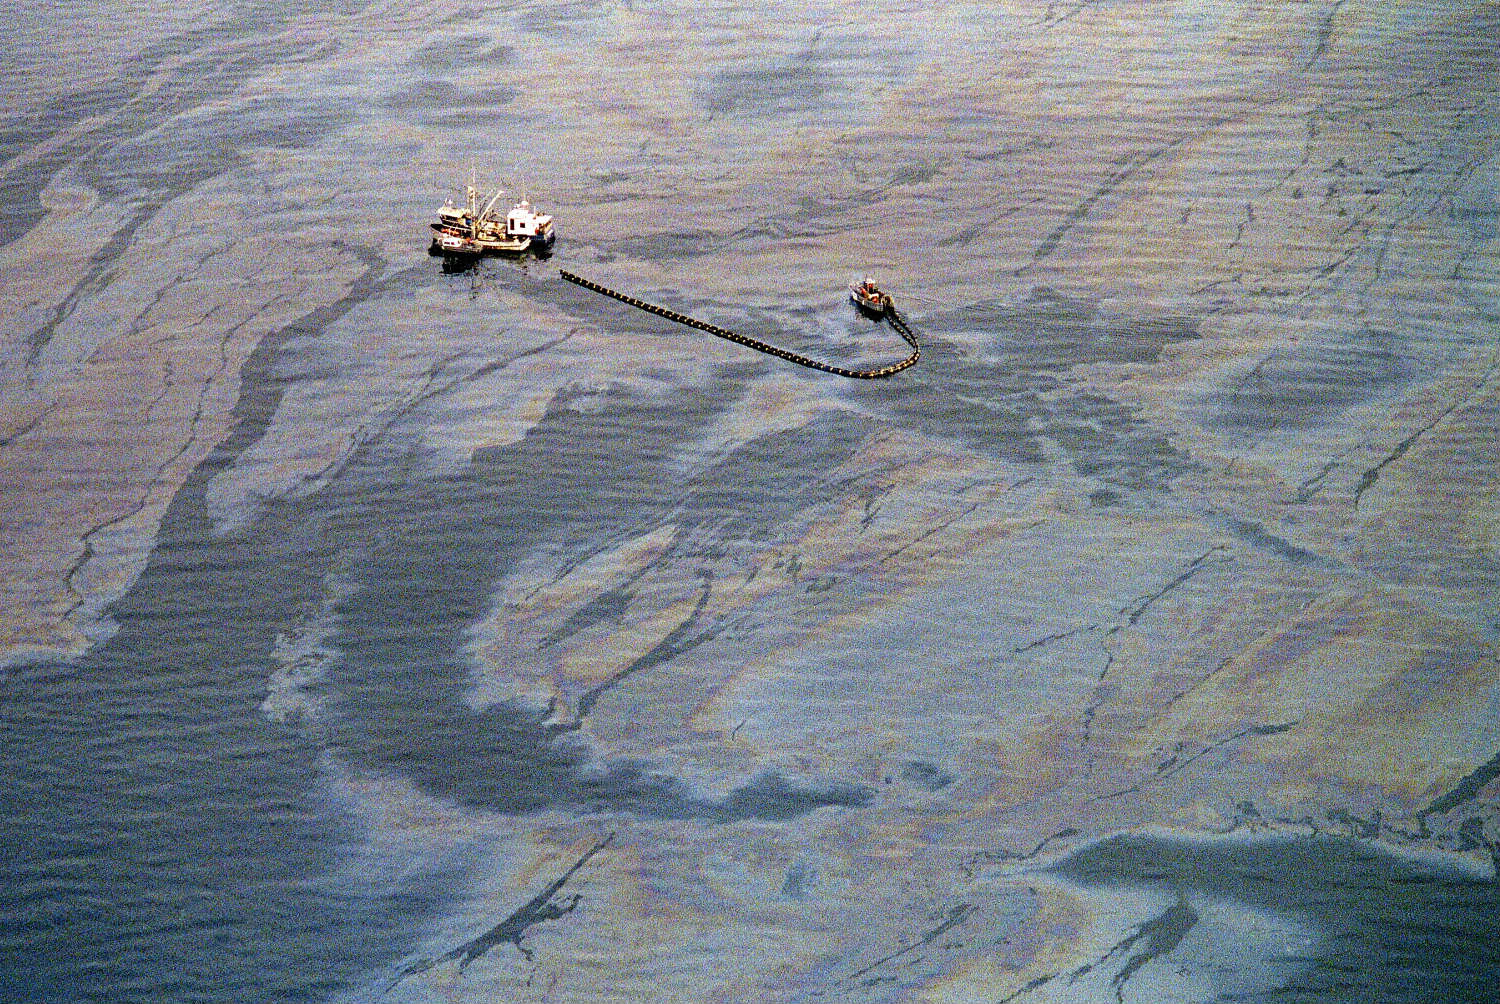 Exxon Valdez oil spill cleanup